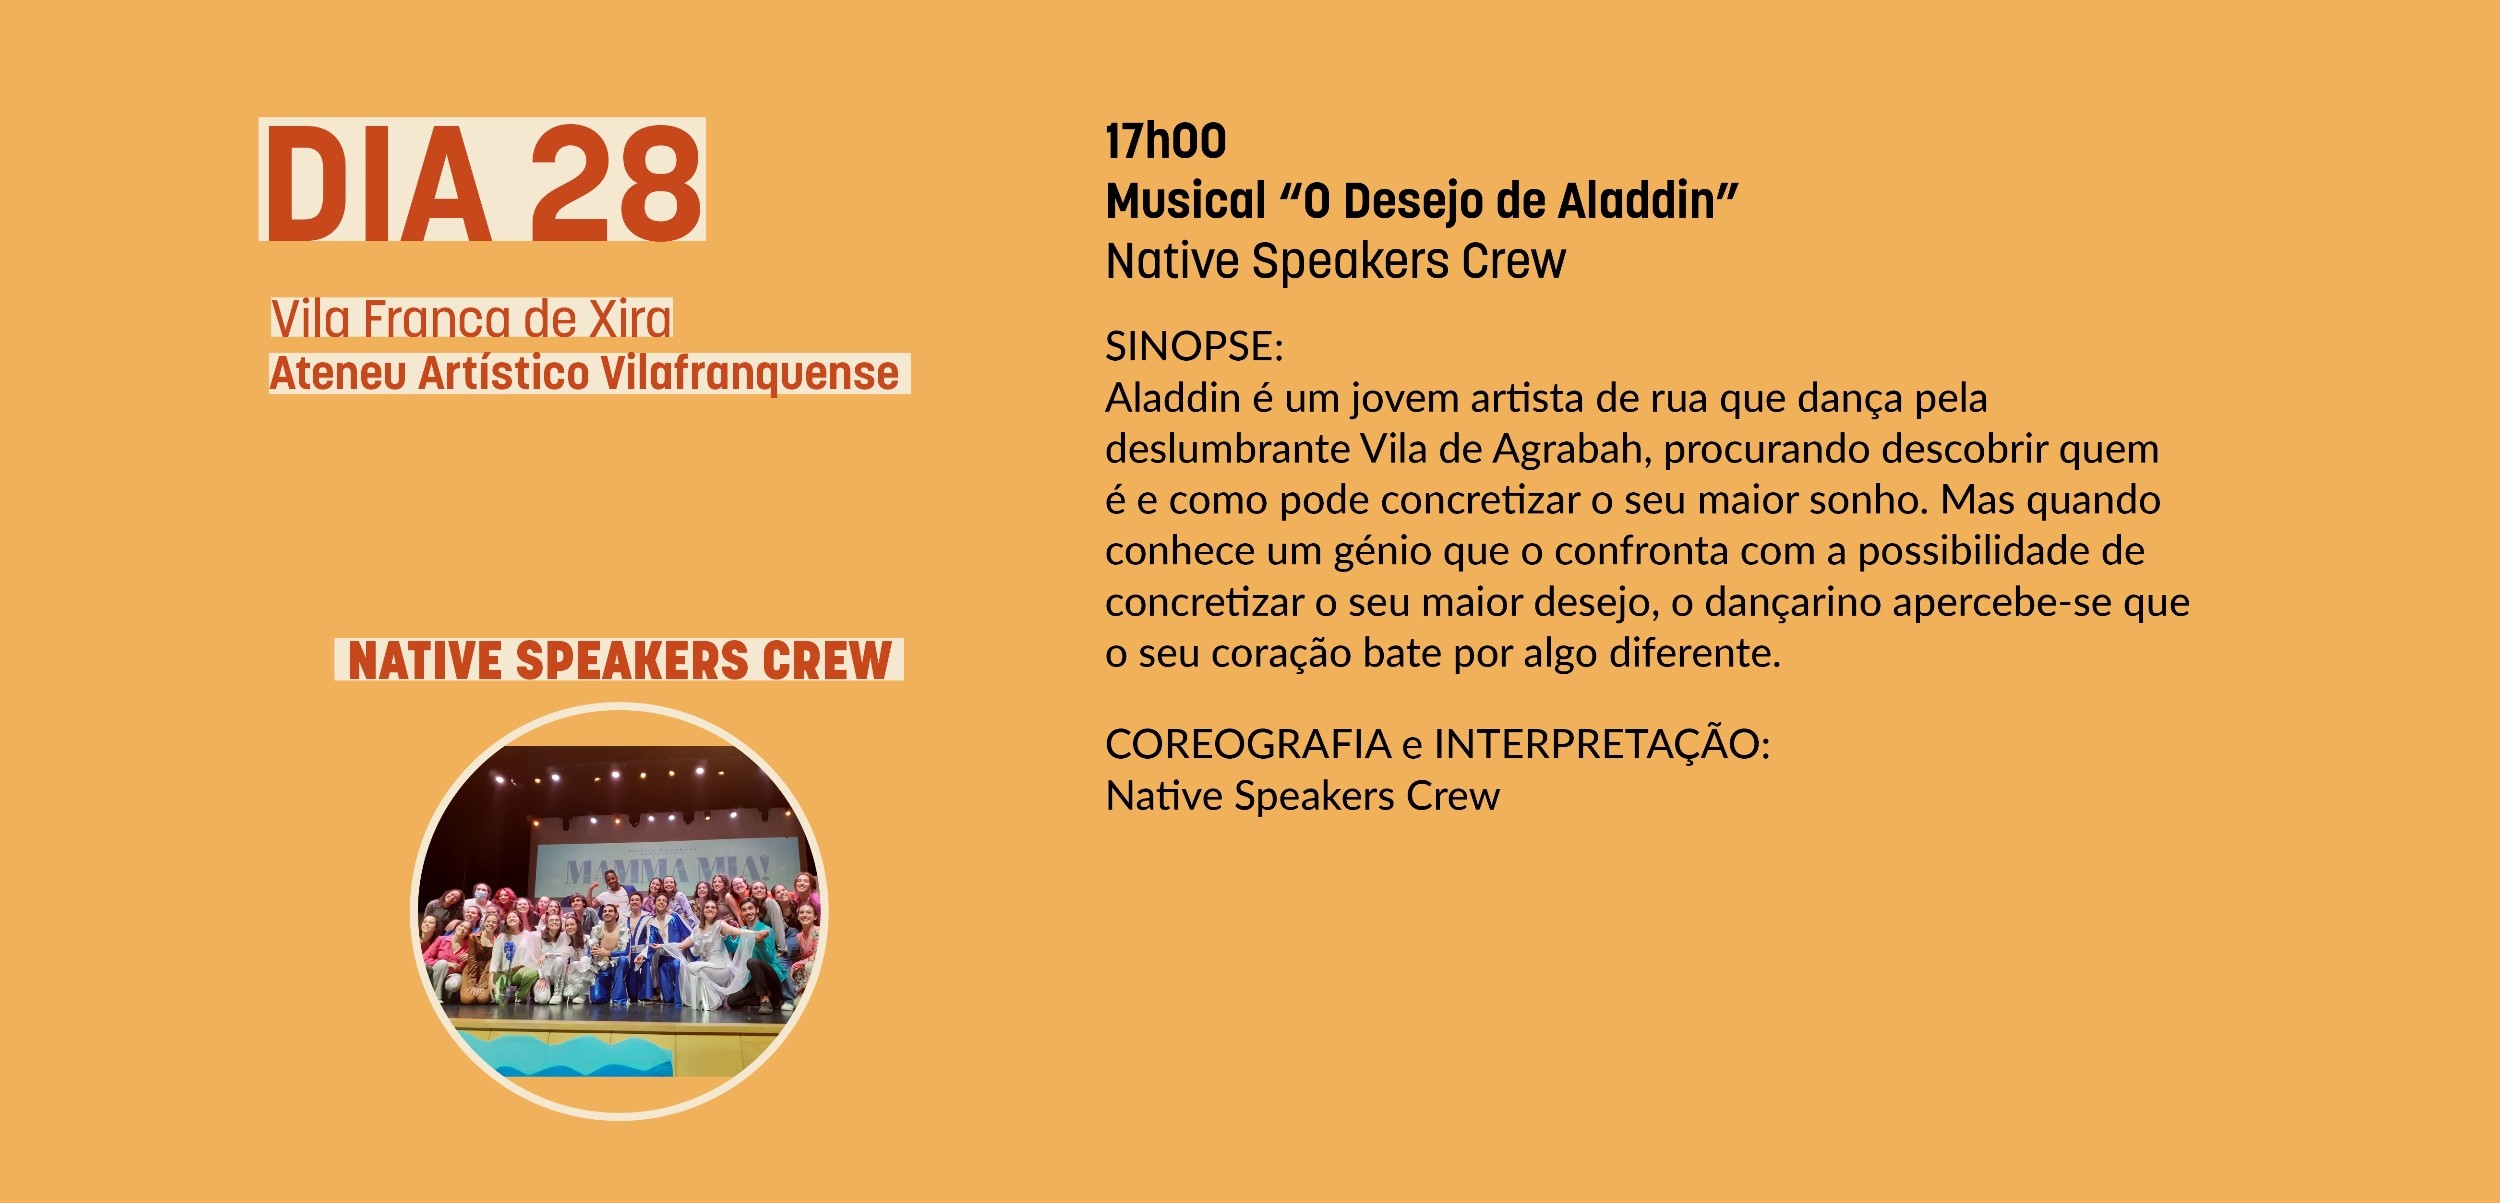 Dia 28 | Vila Franca de Xira (Ateneu Artístico Vilafranquense) | 17h00 |  Musical "O Desejo de Al...